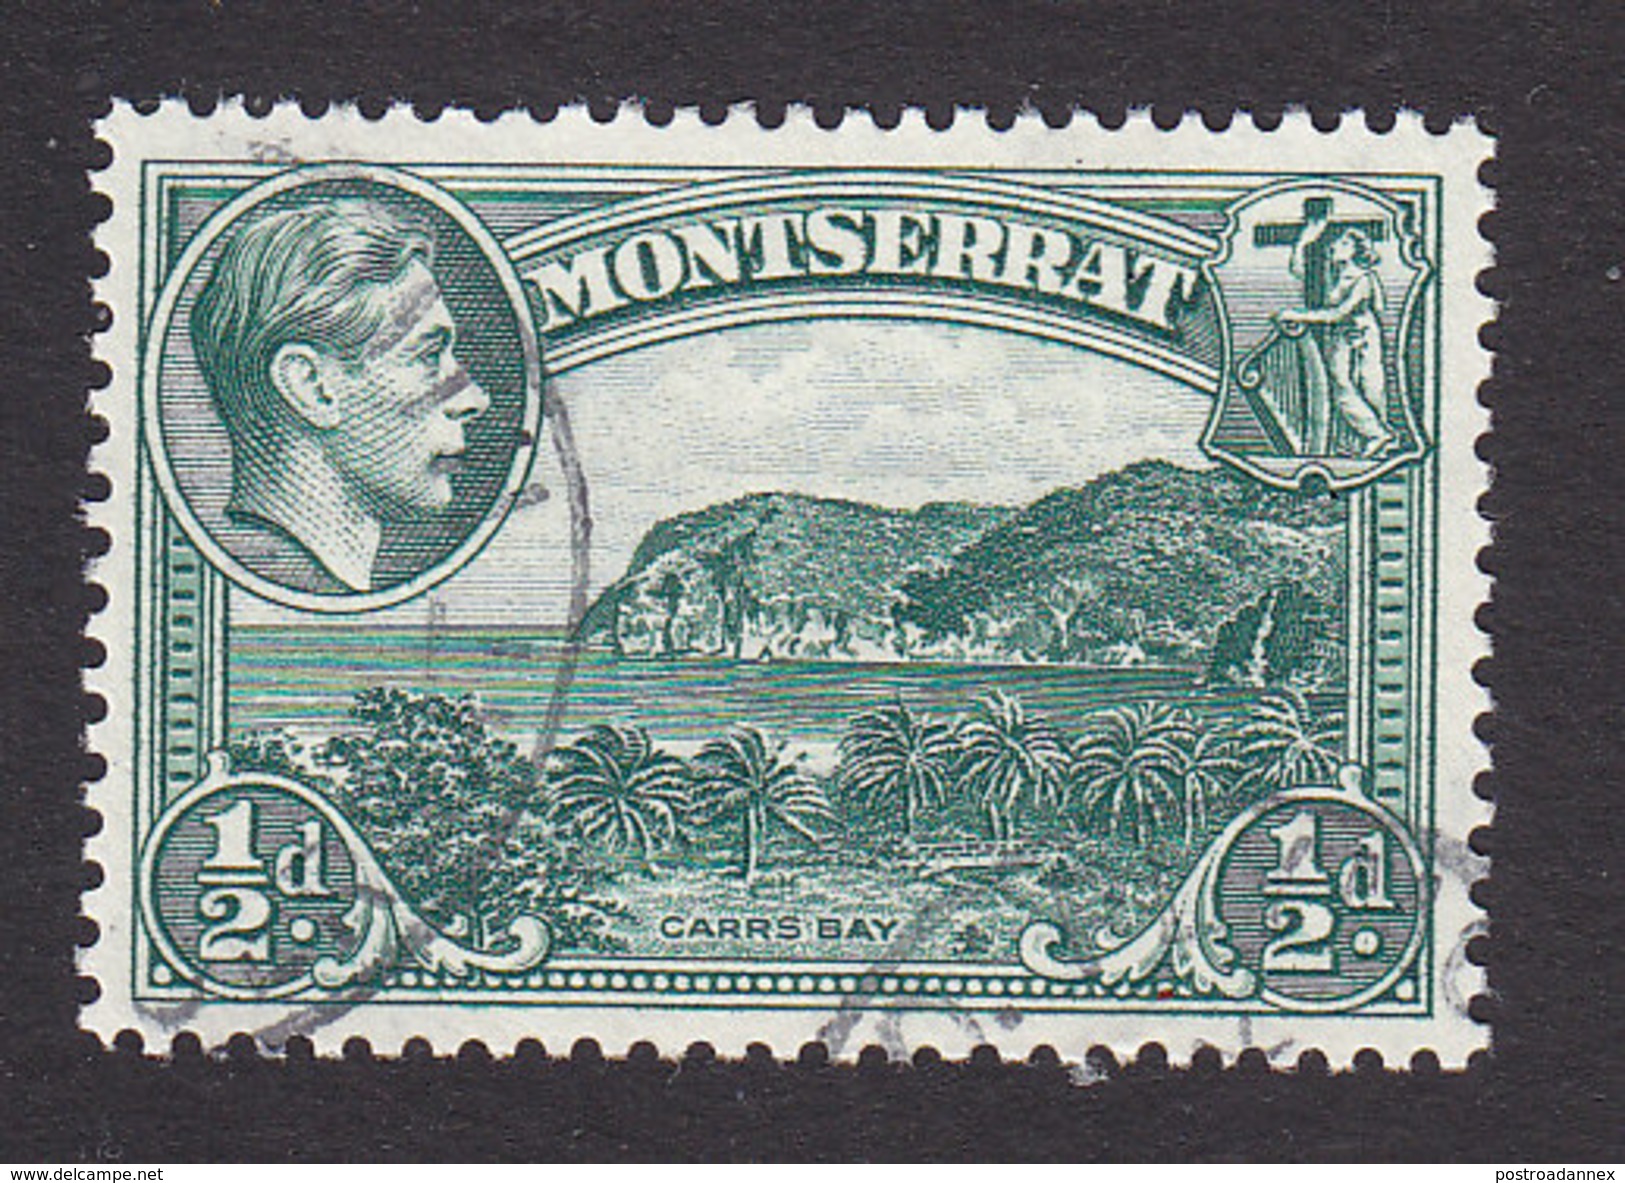 Montserrat, Scott #92a, Used, Carr's Bay, Issued 1941 - Montserrat